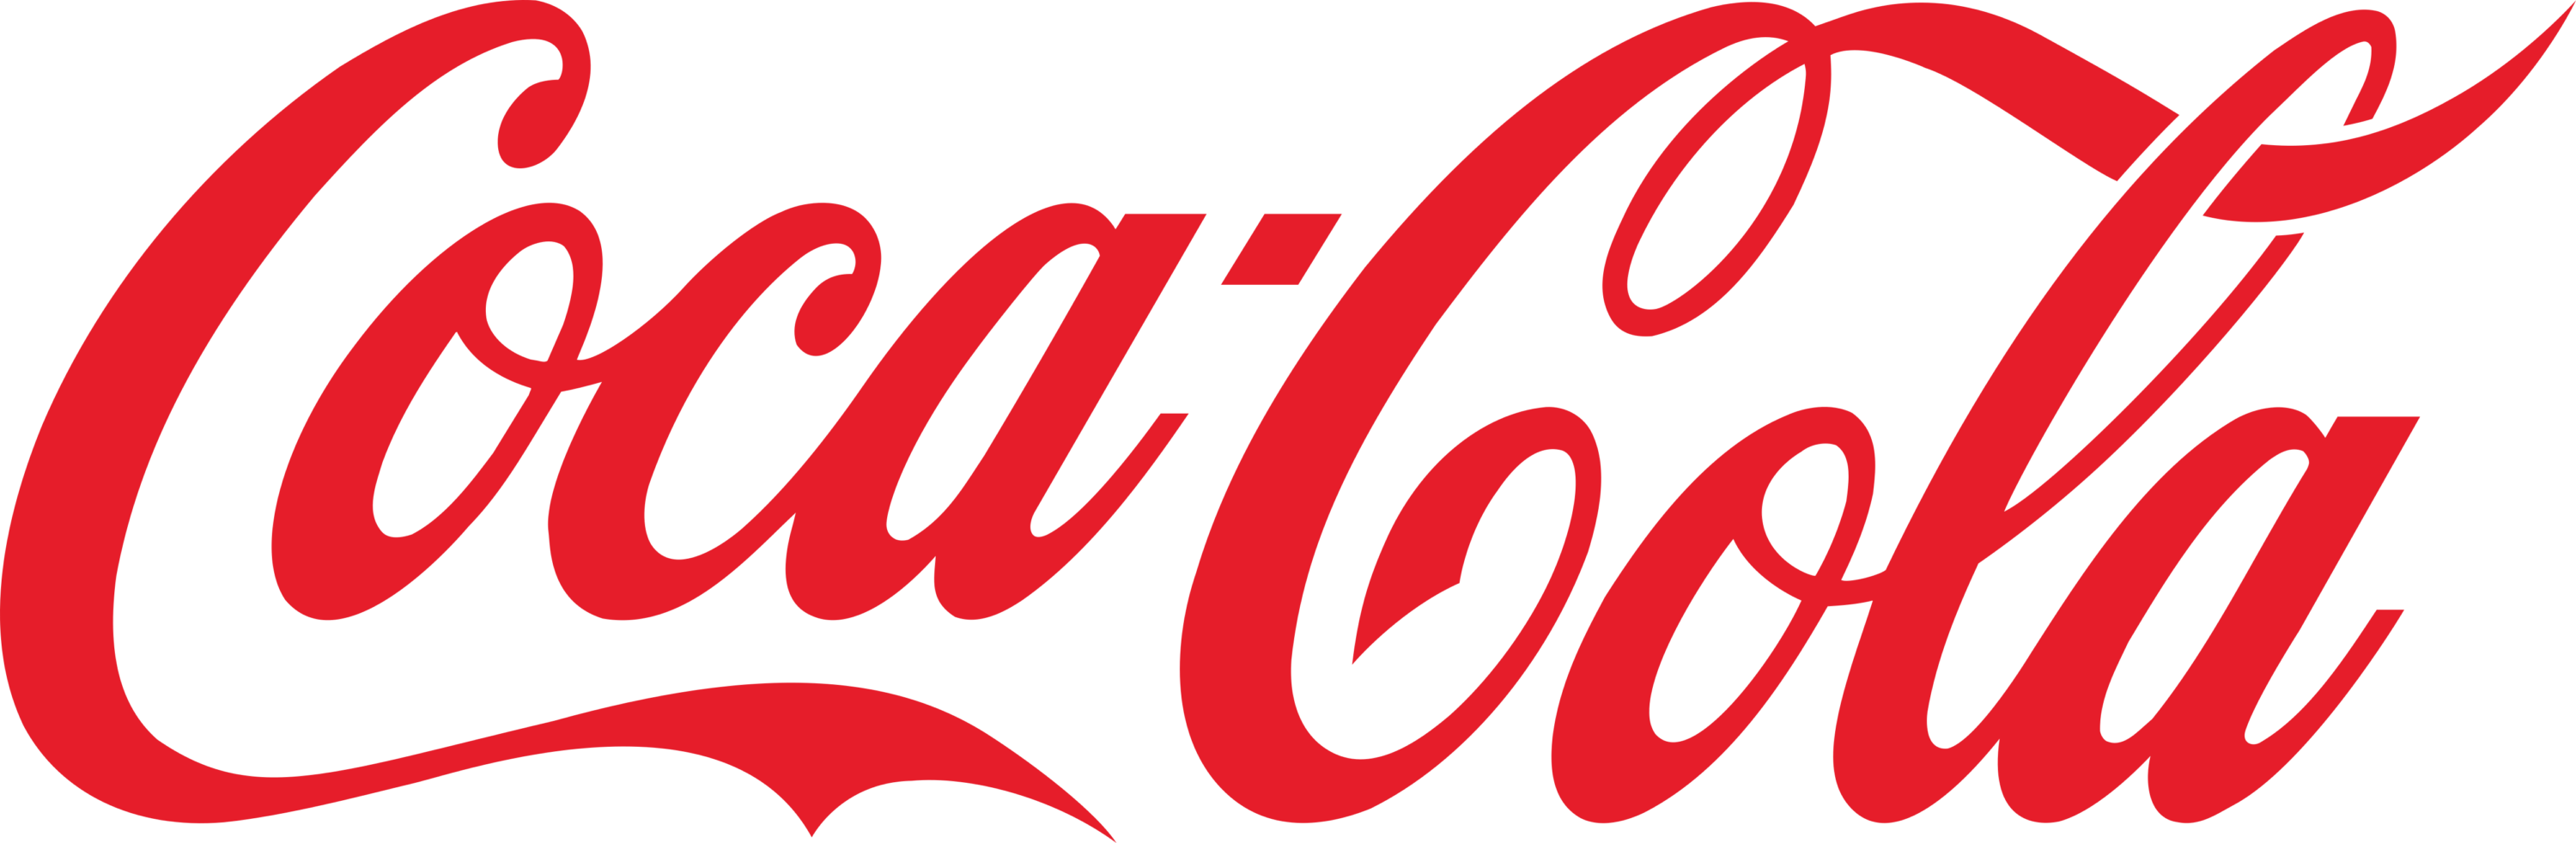 Coca Cola Logo 1946